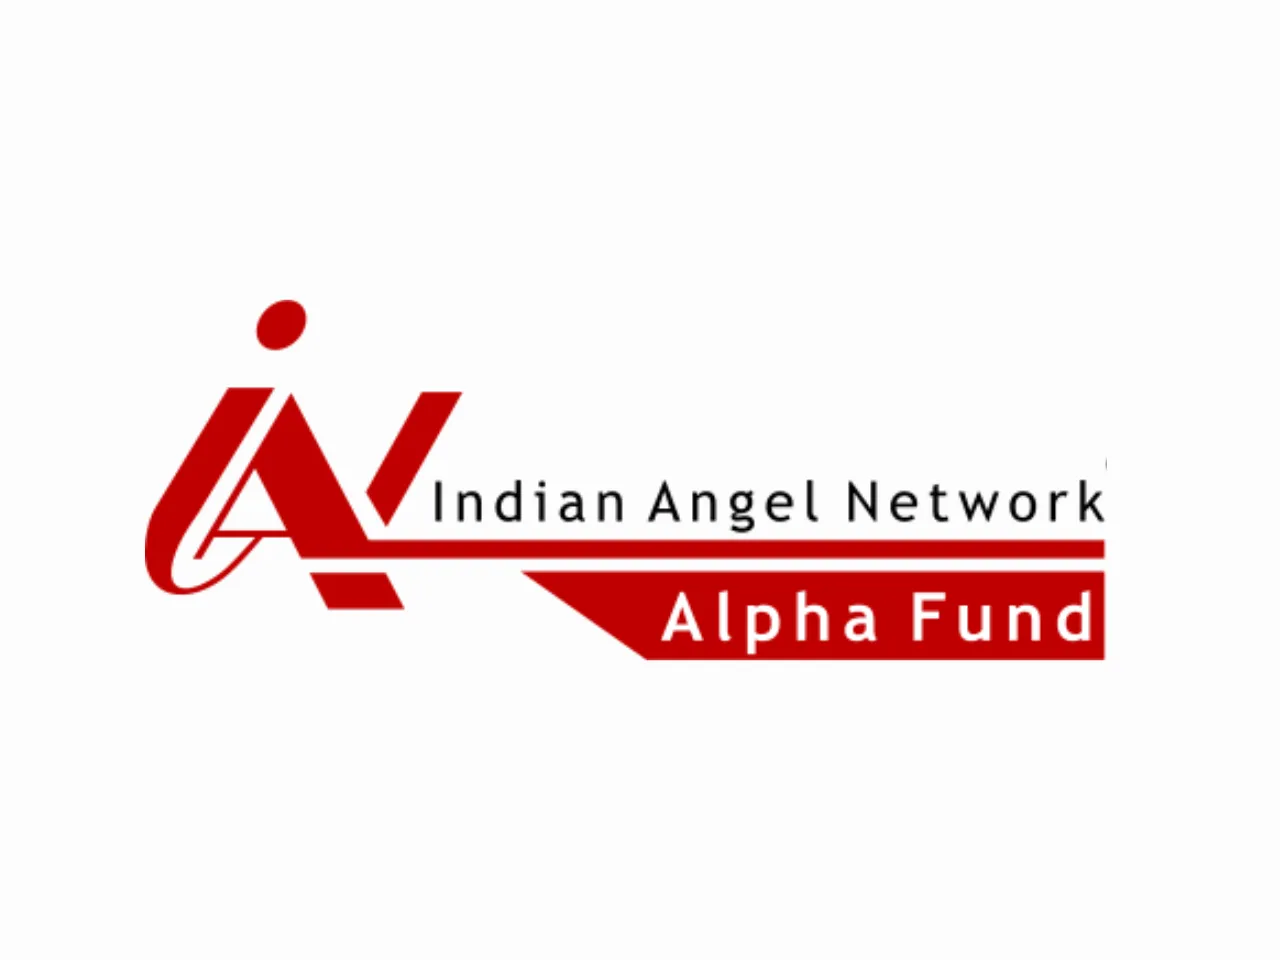 Indian Angel Network, IIM Alumni Singapore collaborates to fund new startups, create jobs